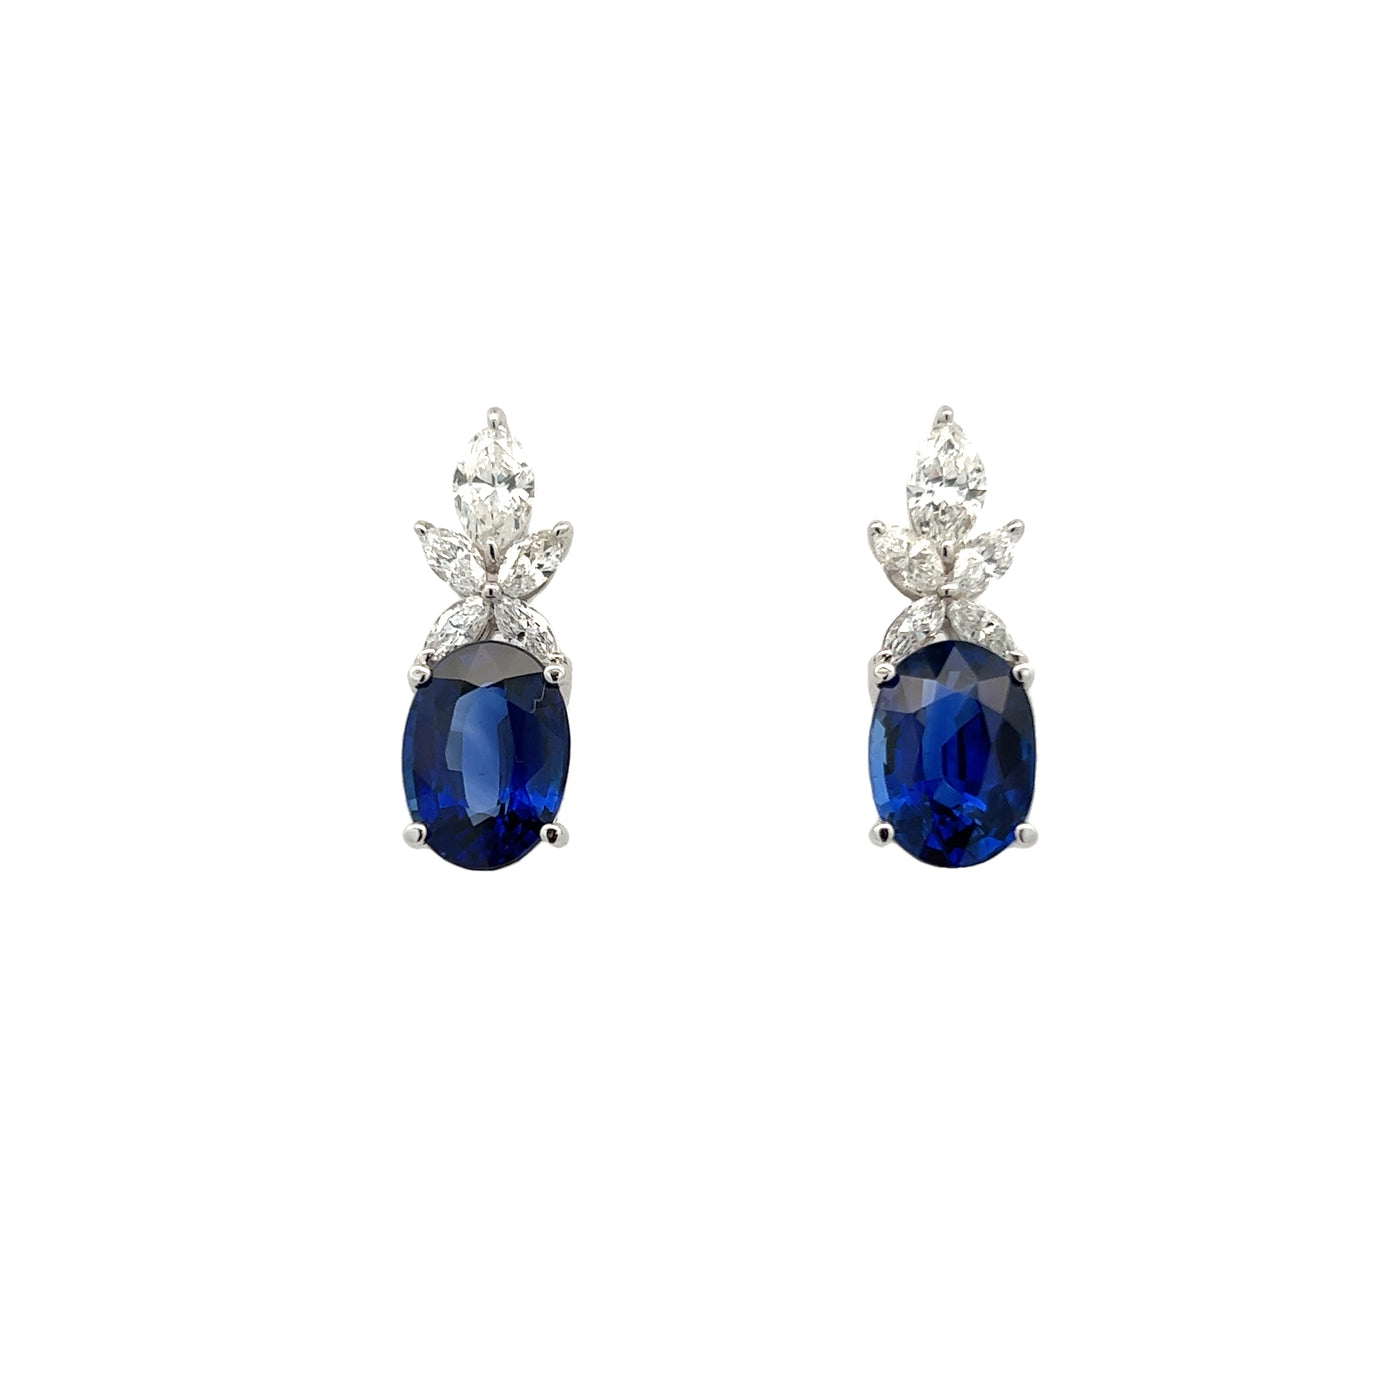 10.51 Carat Oval Sapphire and Diamond Earrings